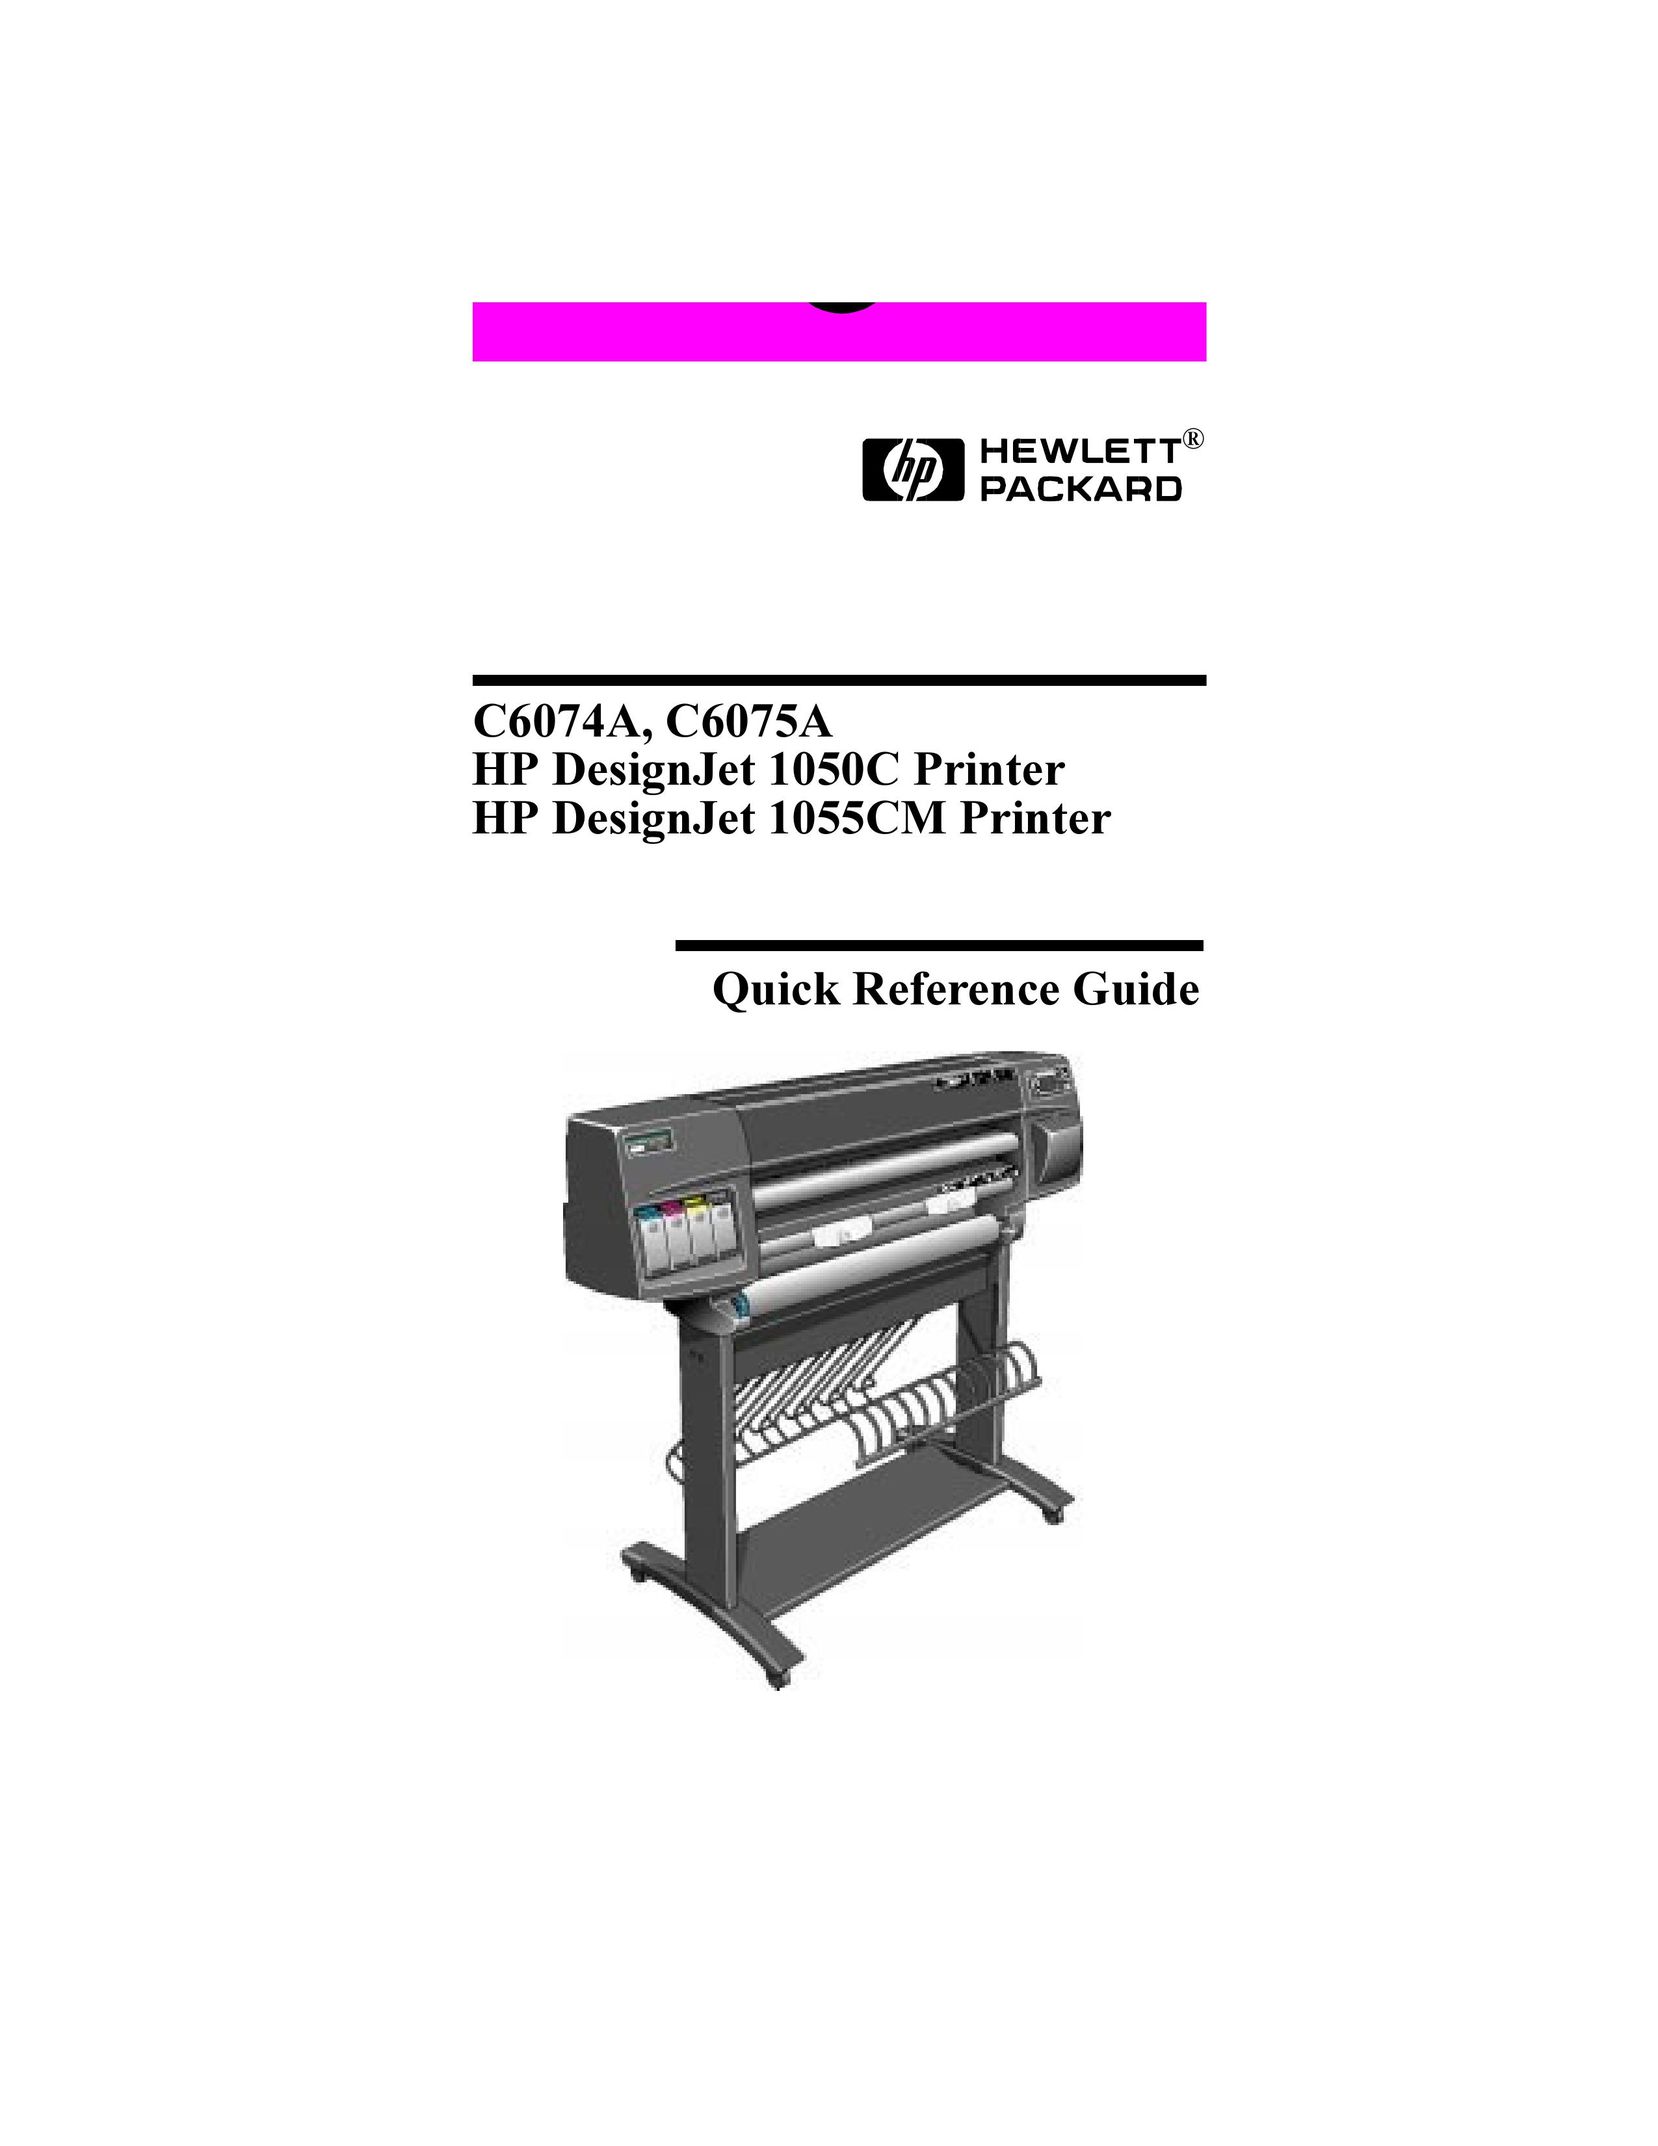 HP (Hewlett-Packard) 1050C Printer User Manual